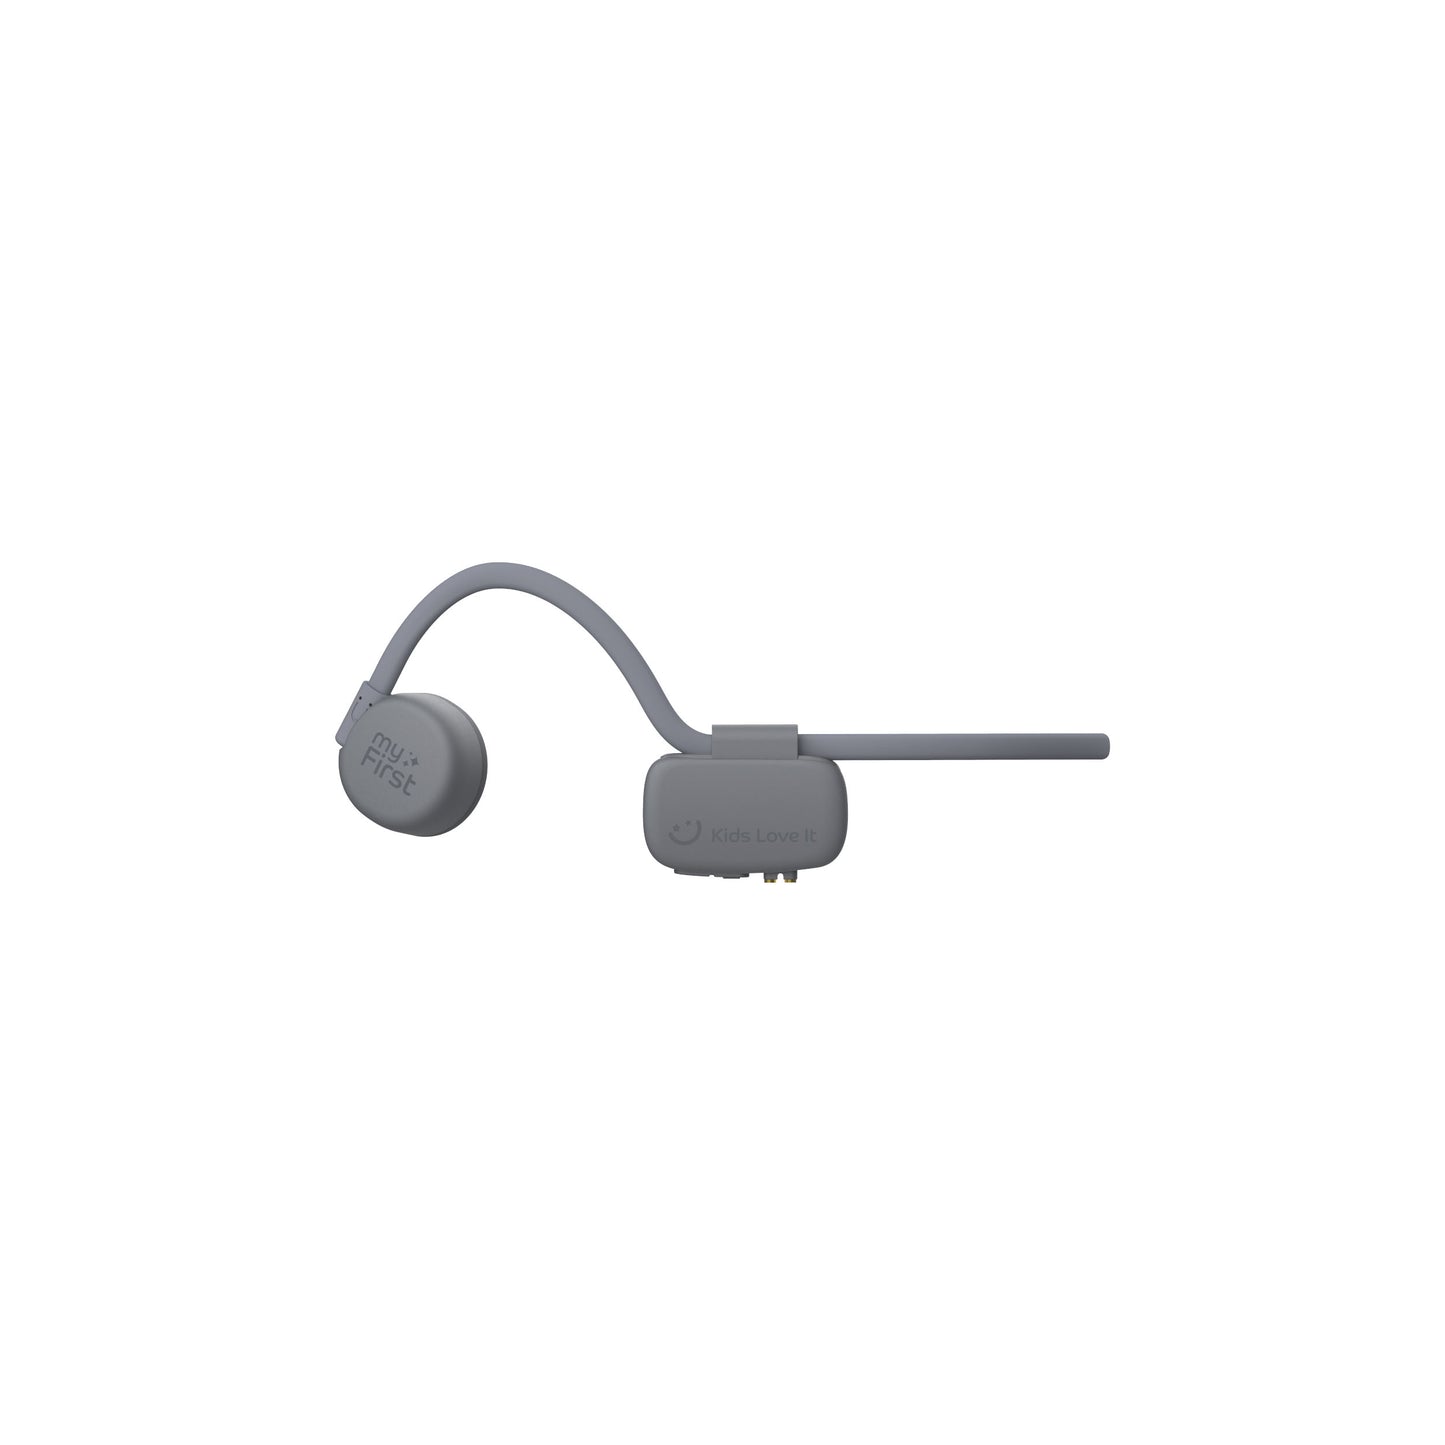 Bone Conduction Headphone for Kids | myFirst Headphones BC Wireless